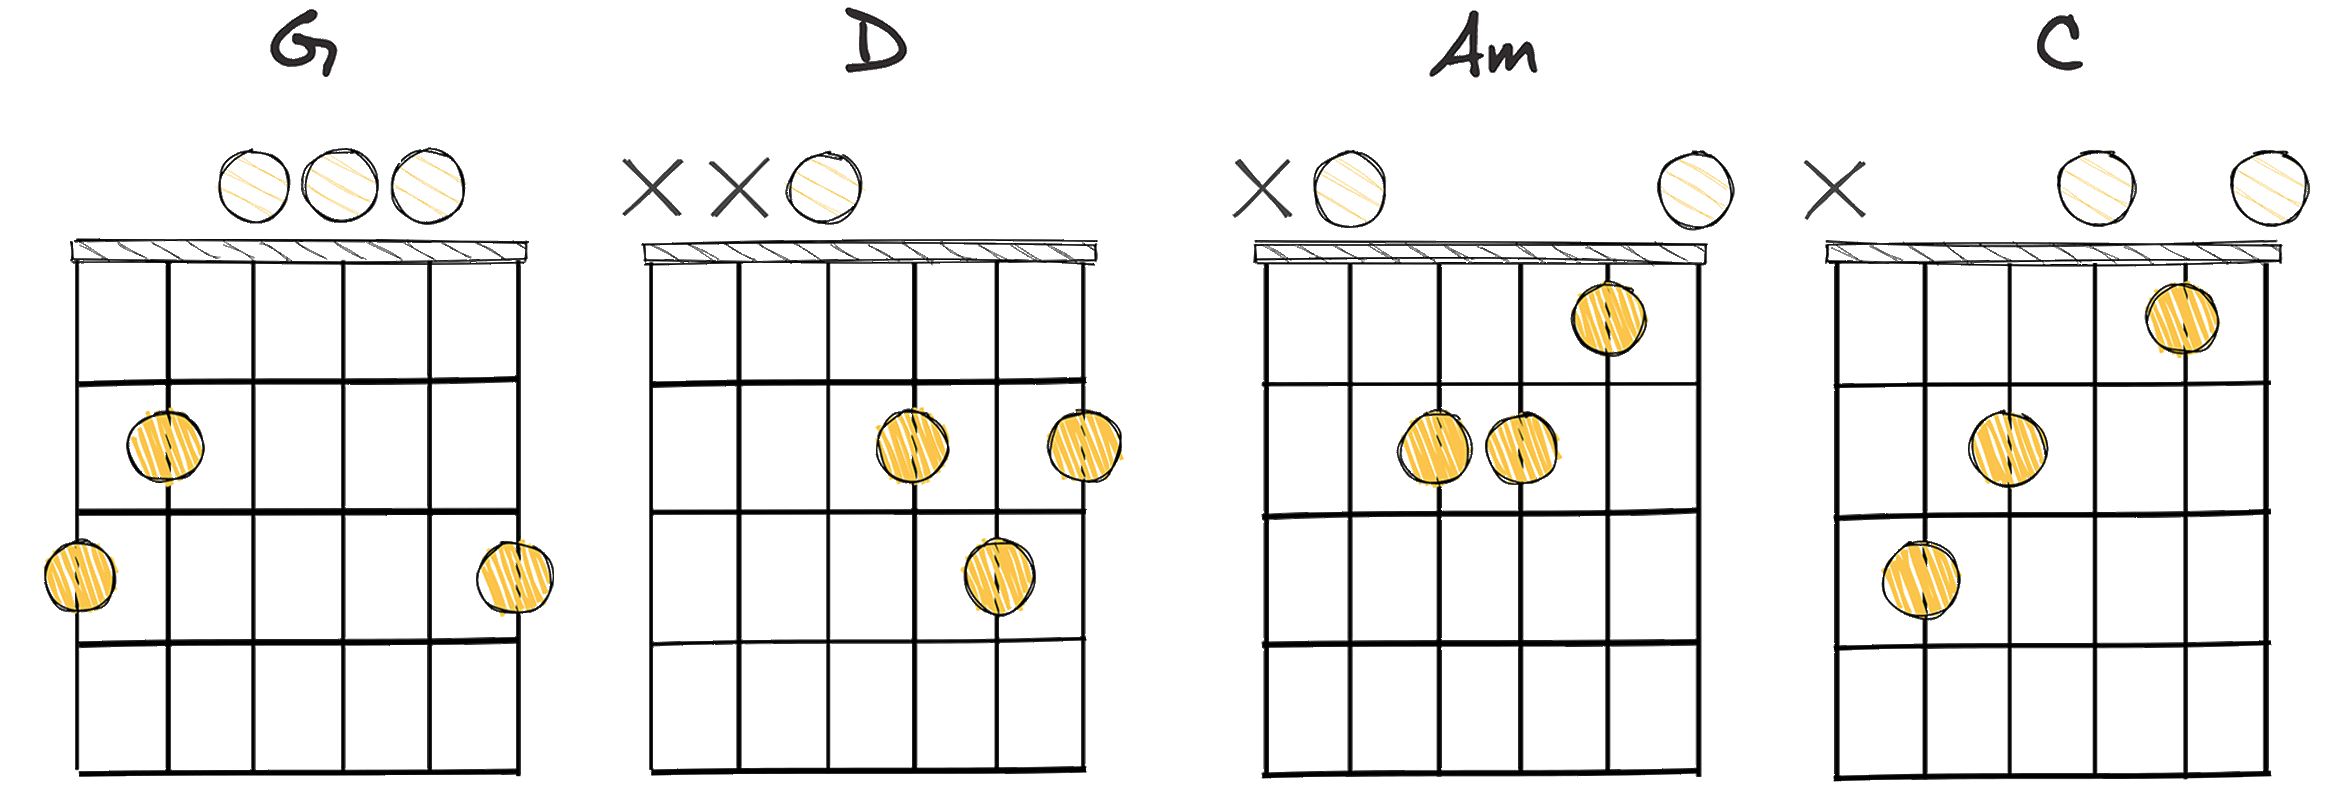 I-V-ii-IV (1-5-2-4) chords diagram